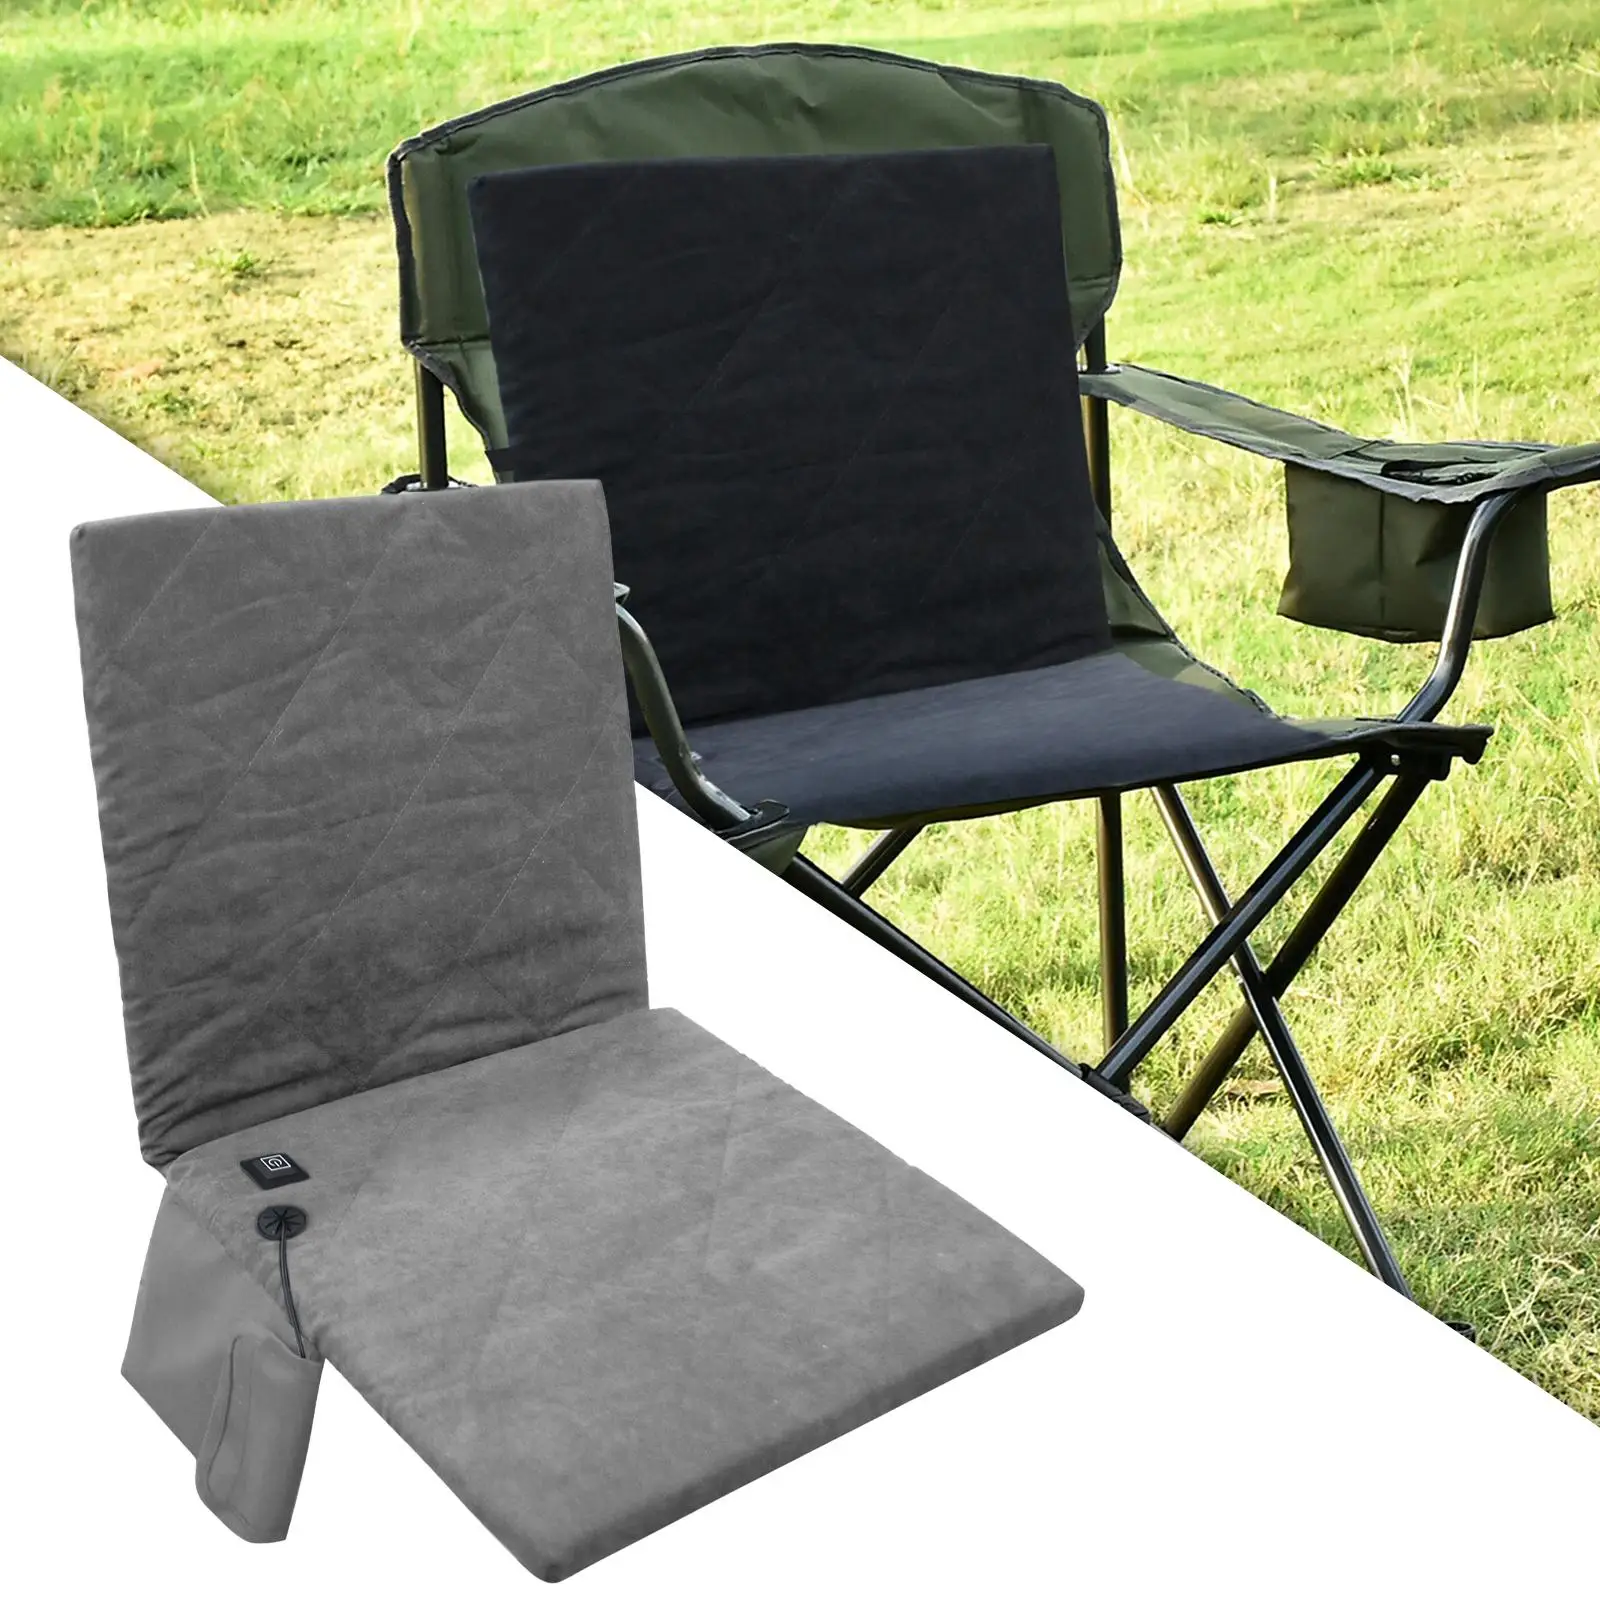 Chair Cover Heated Cushion for Patio Chair Office Chair Camping Chair Heated Cushion for Fishing BBQ